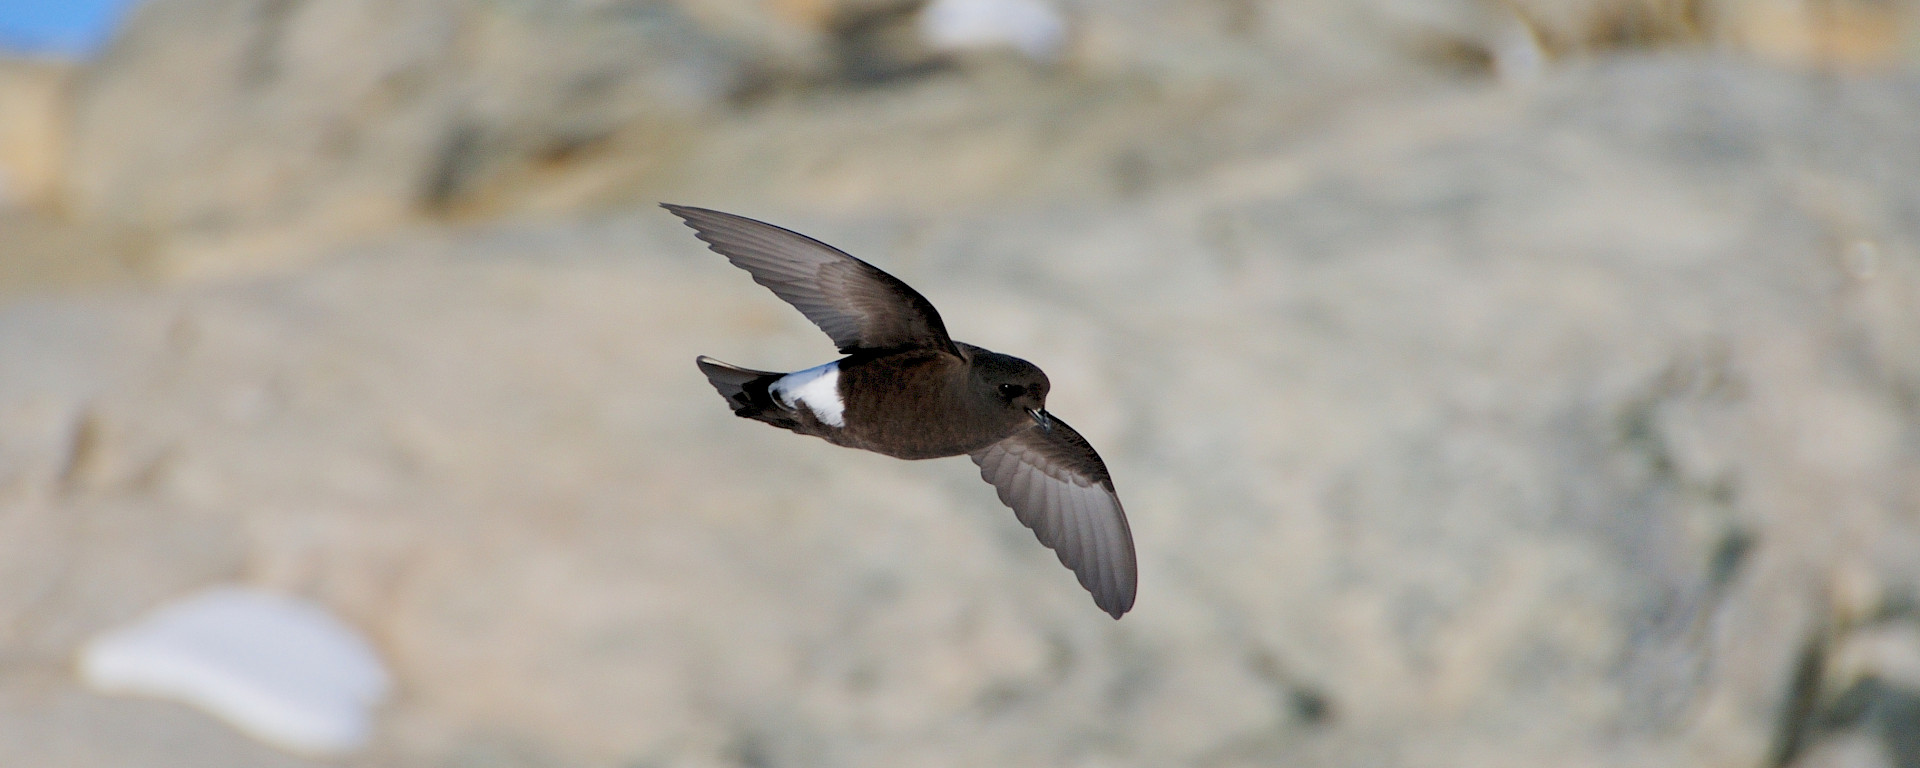 A brown bird flying through a rocky landscape.